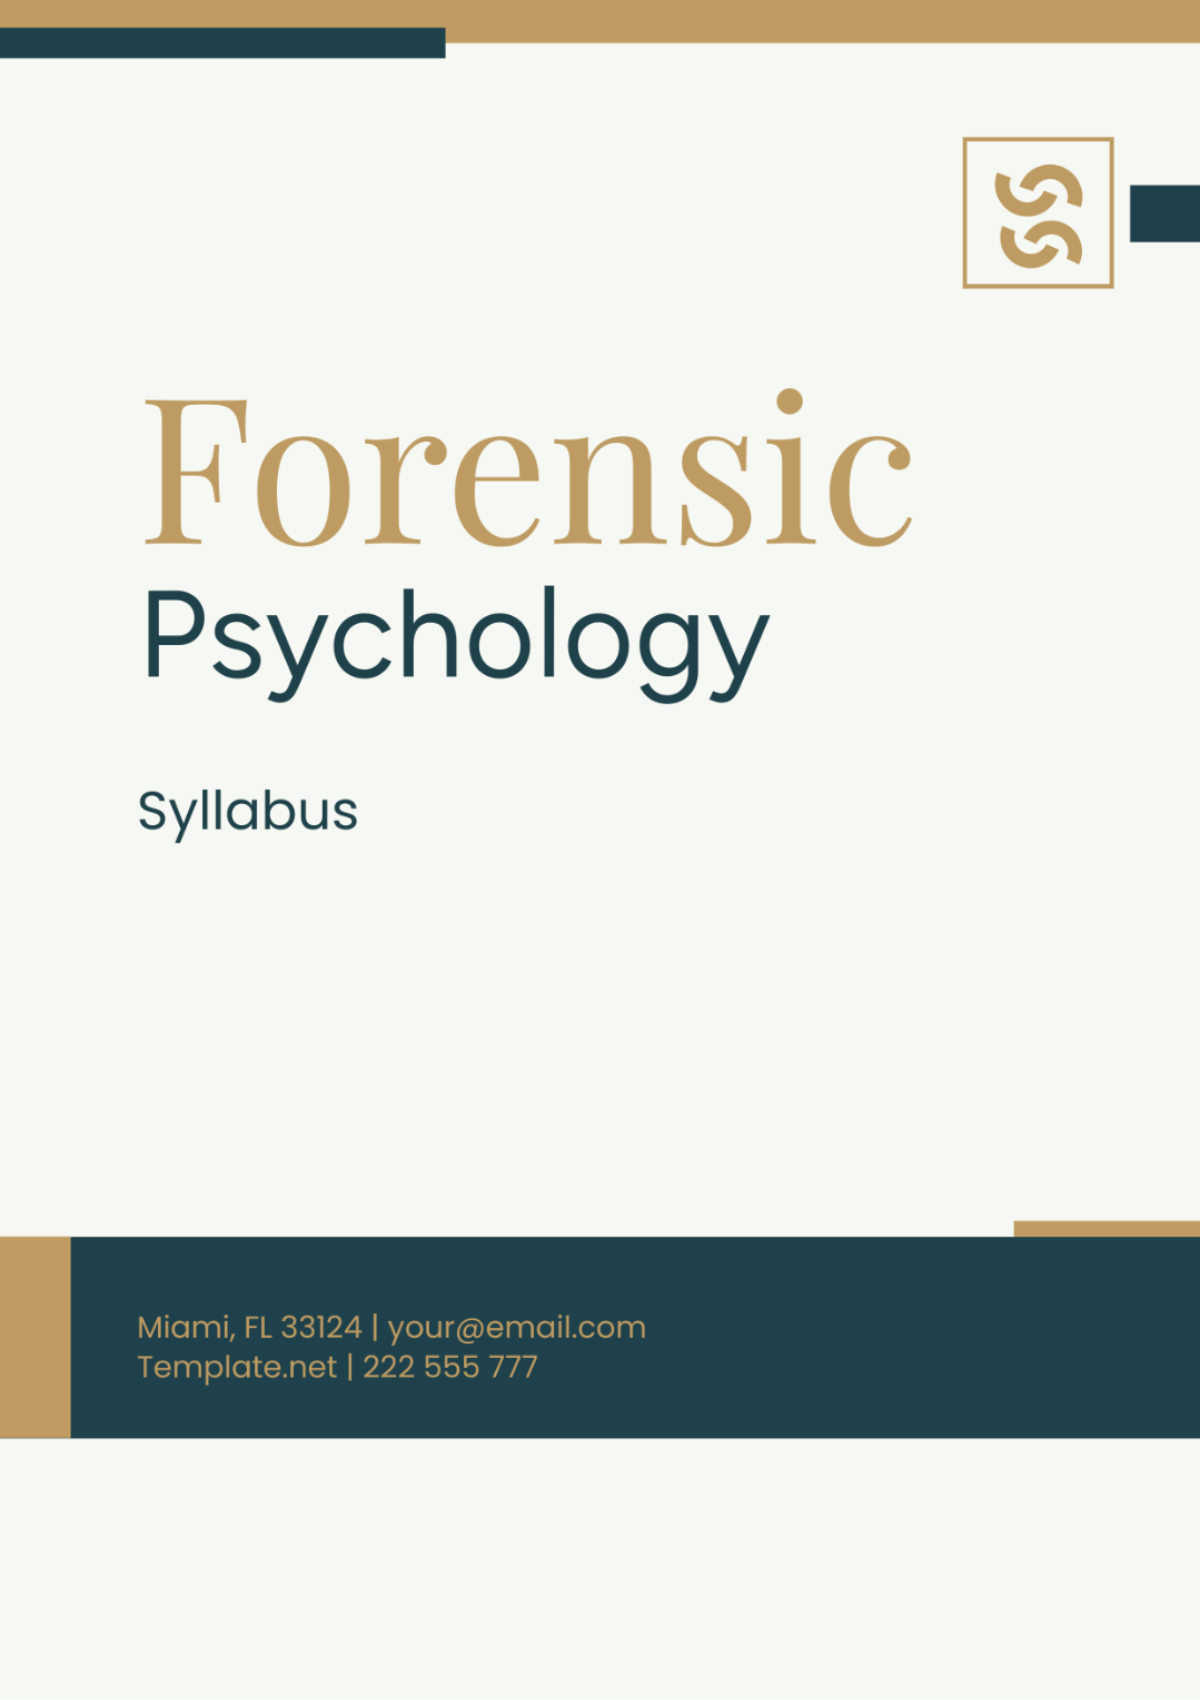 Forensic Psychology Syllabus Template